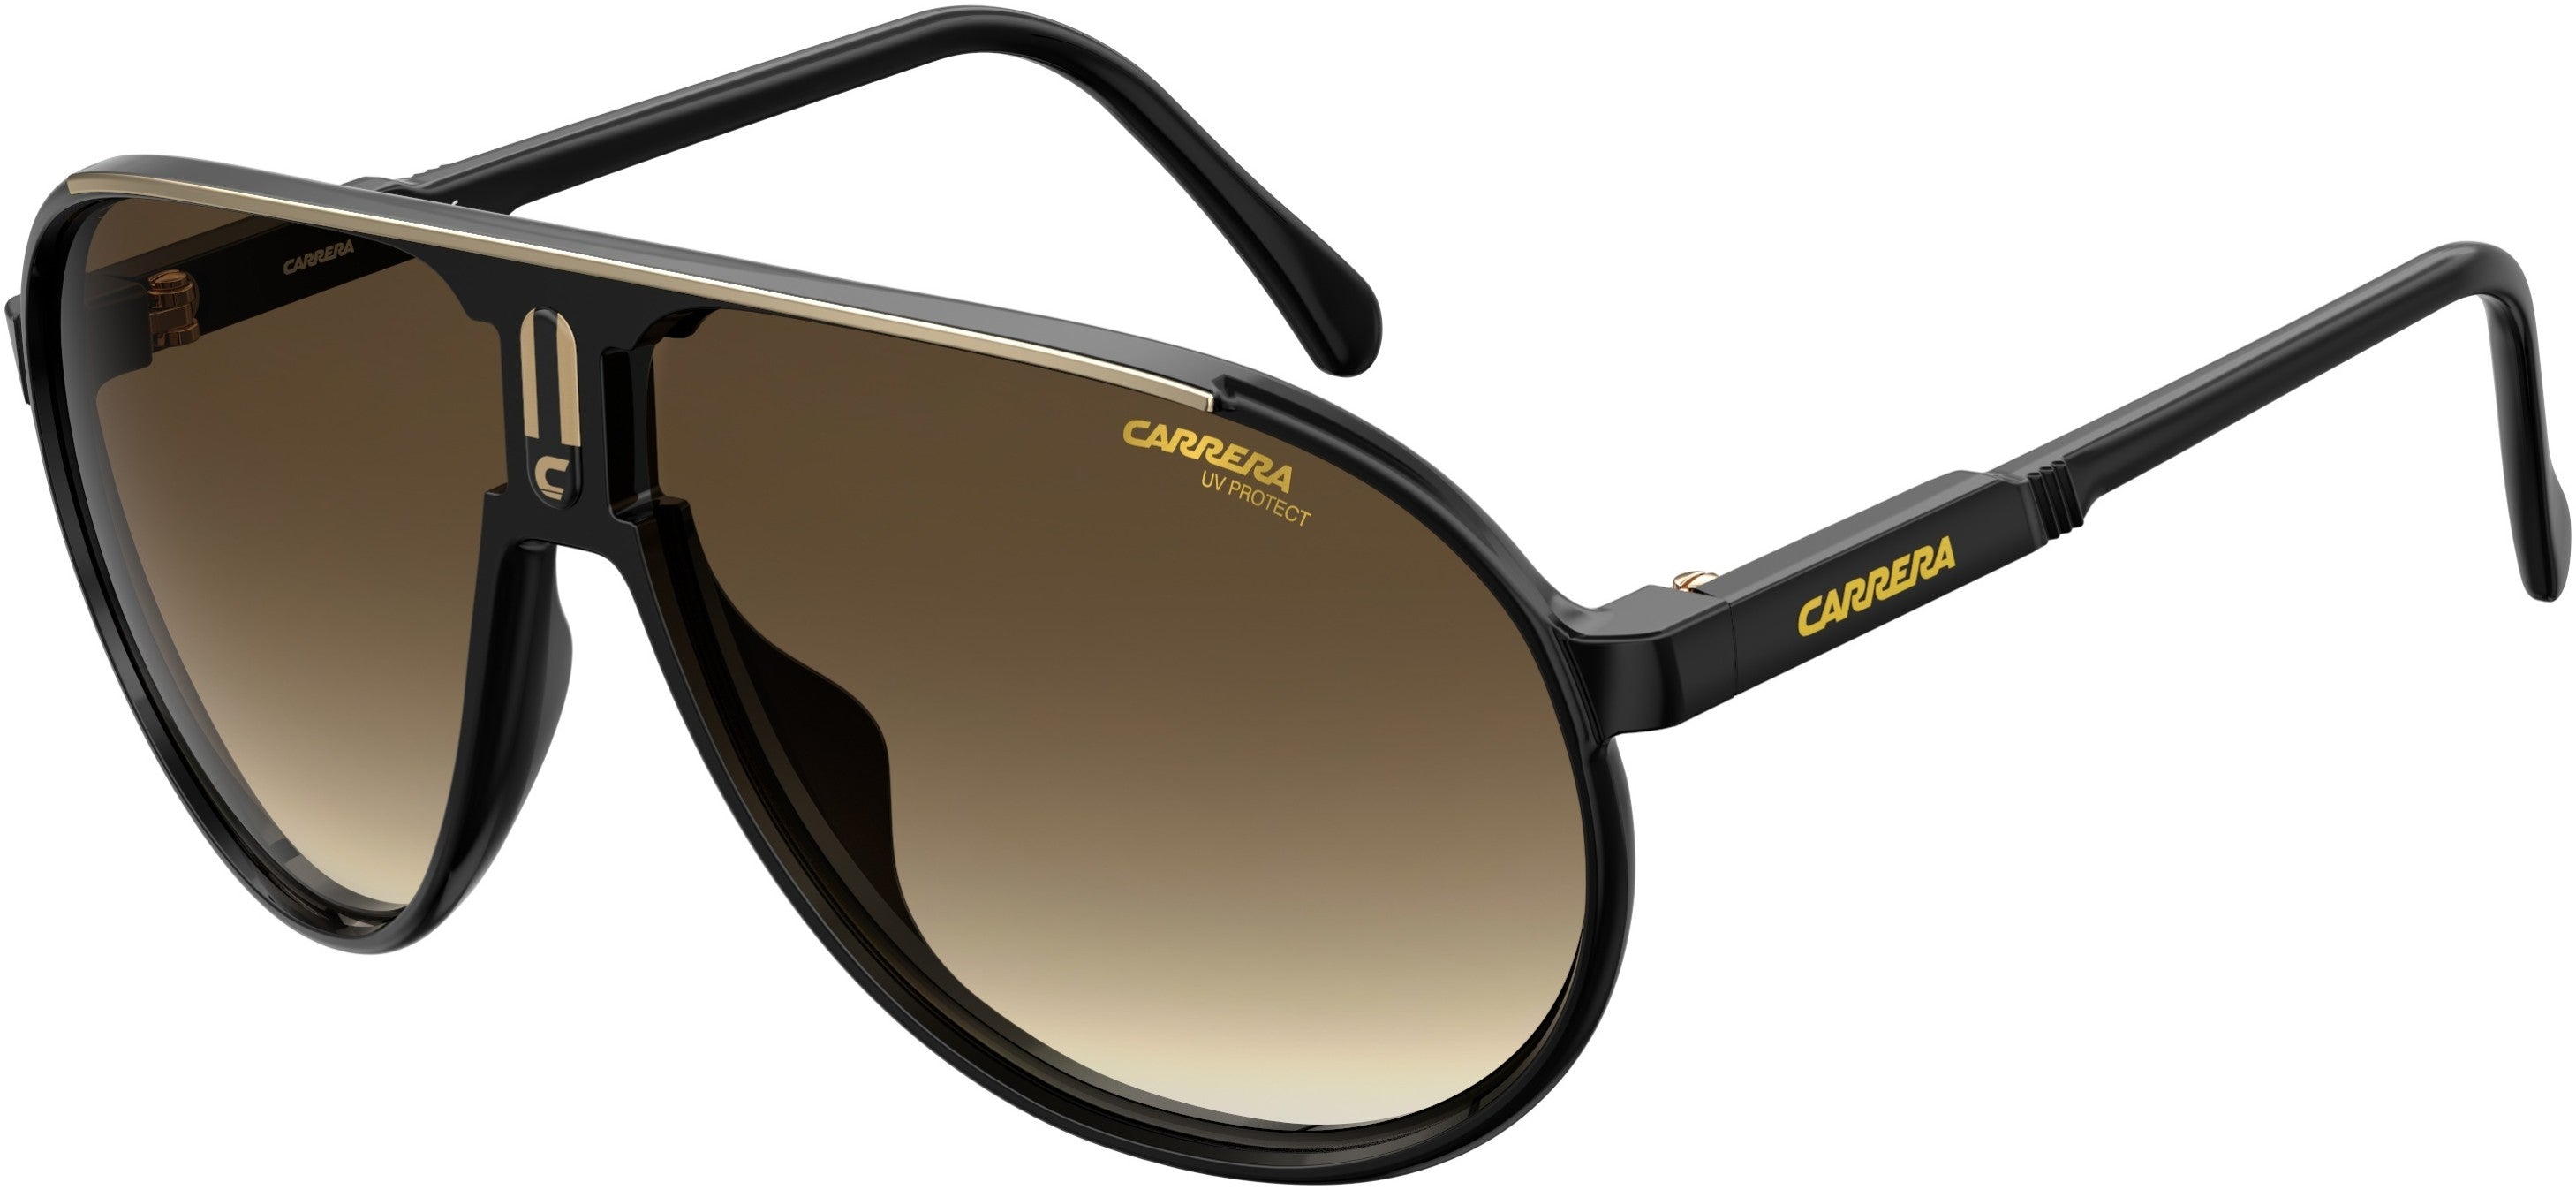 Carrera Champion/S Aviator Sunglasses 0807-0807  Black (HA Brown Gradient)